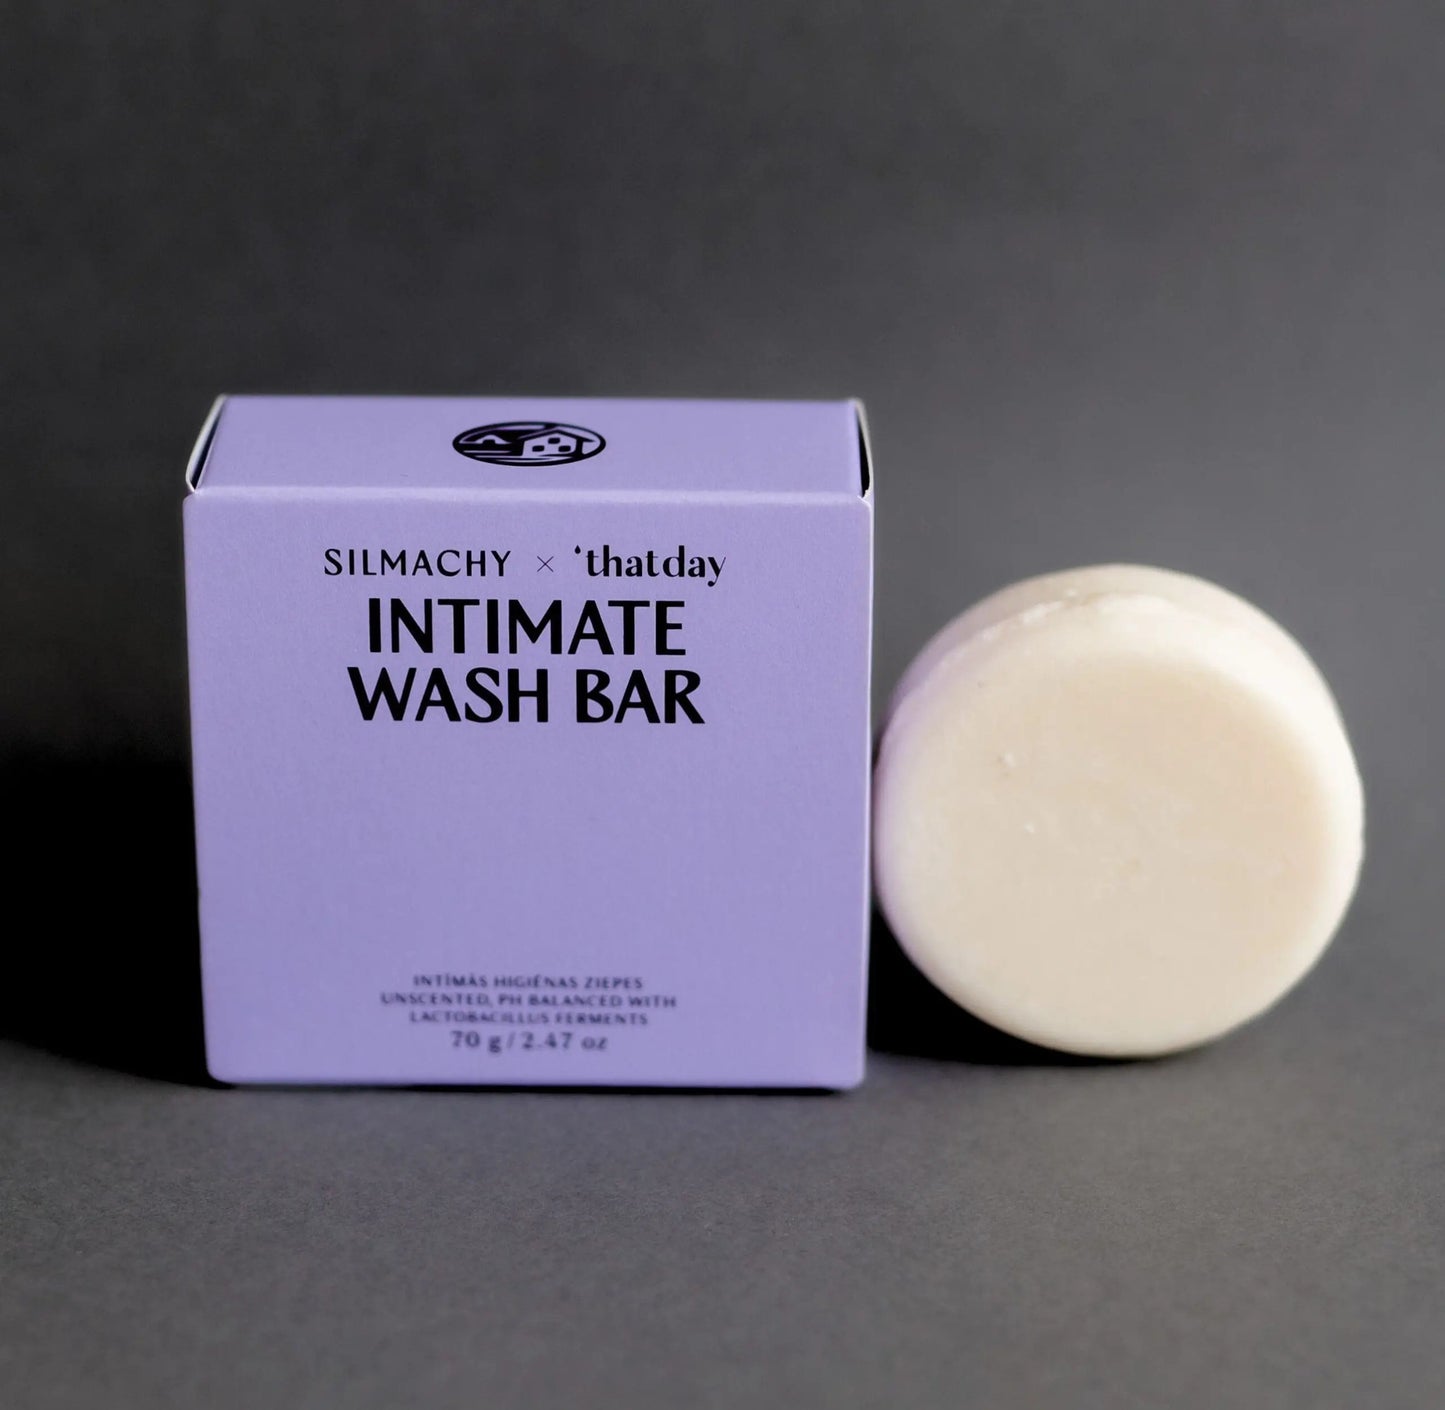 Intimate soap bar